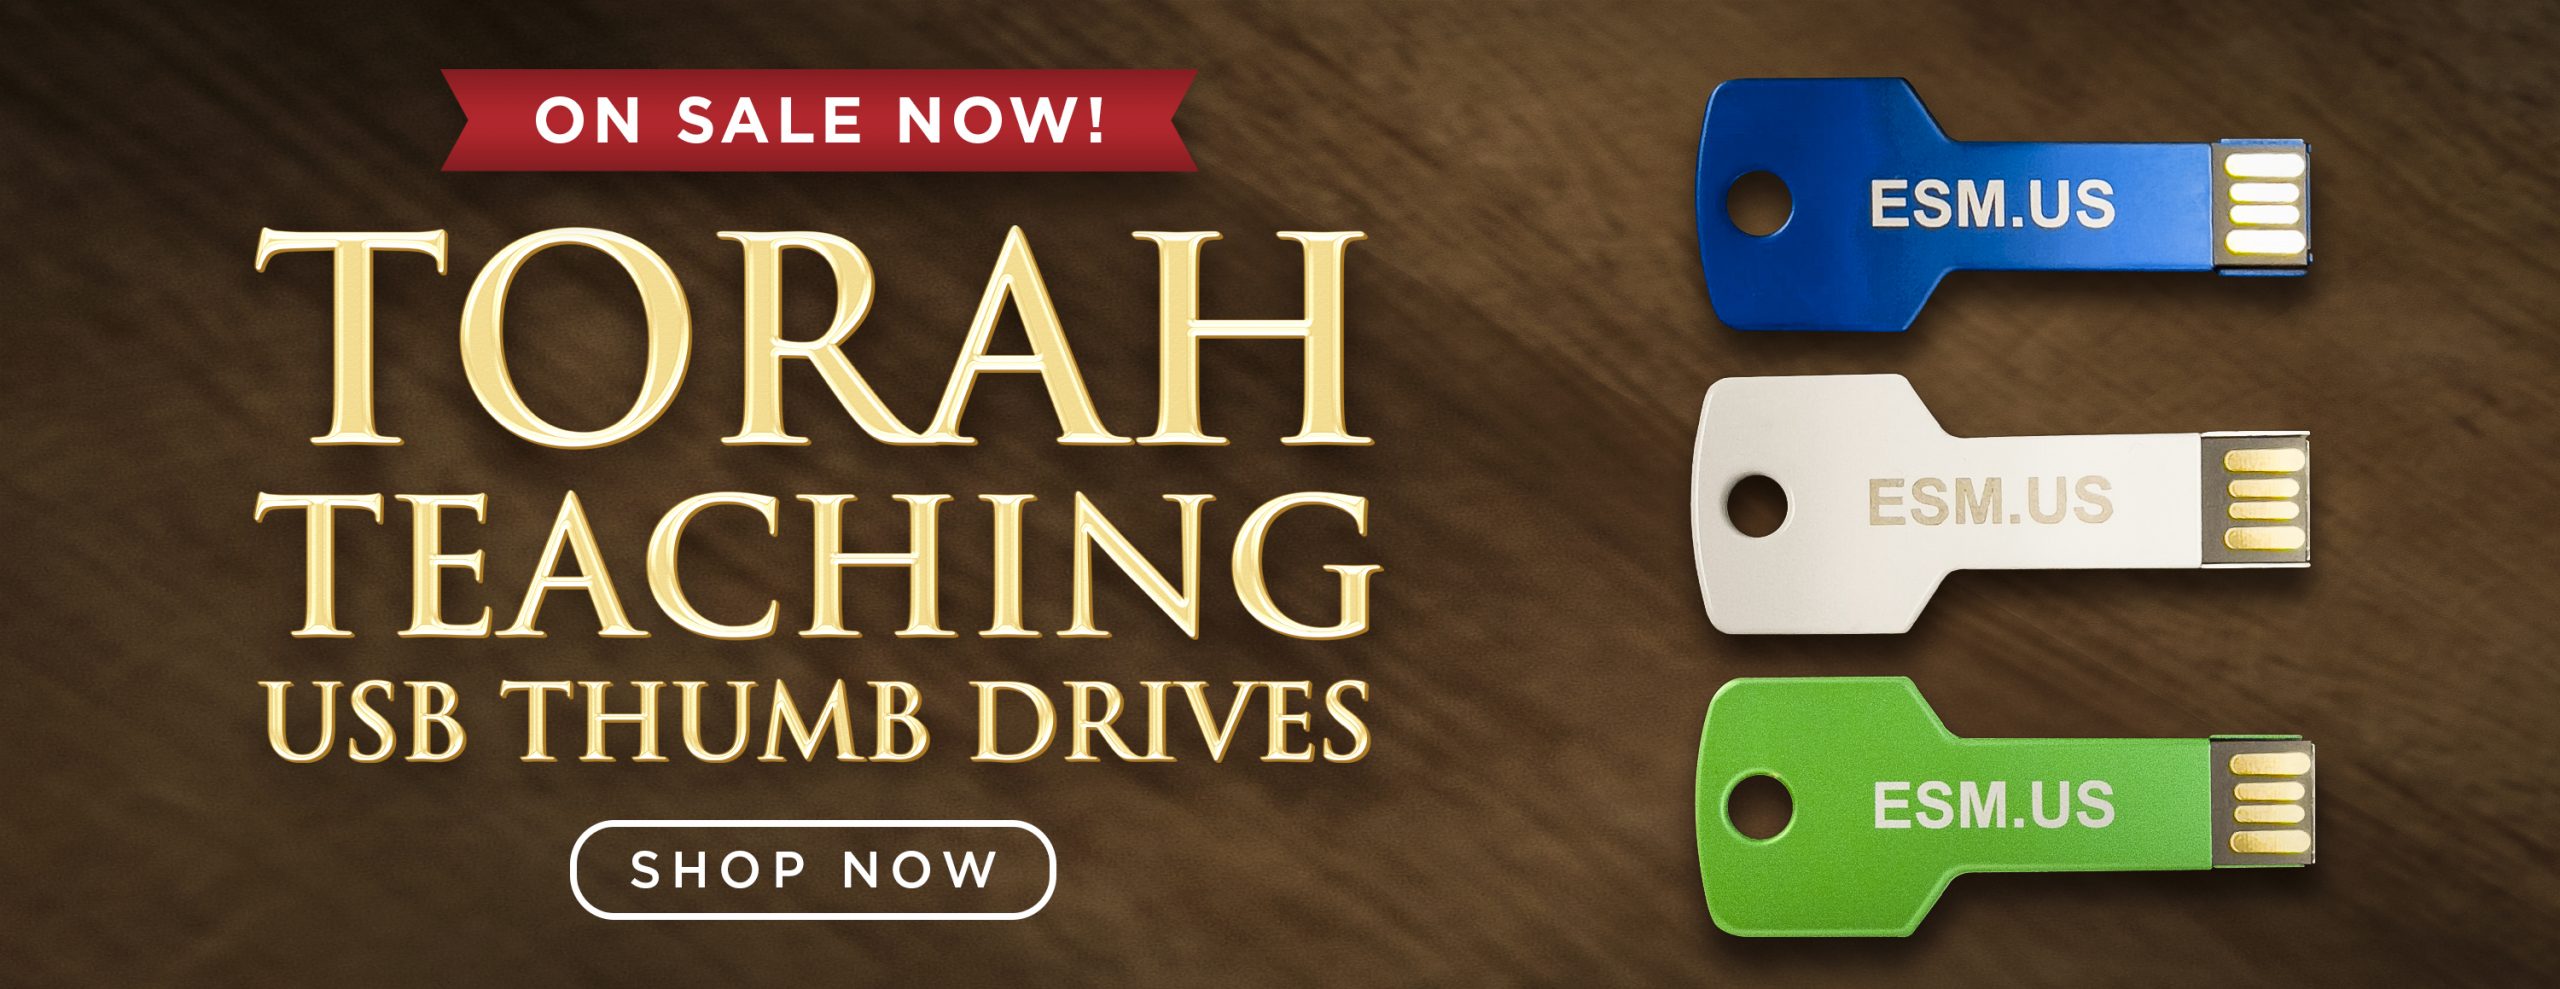 Torah Teachings USB AD Banner